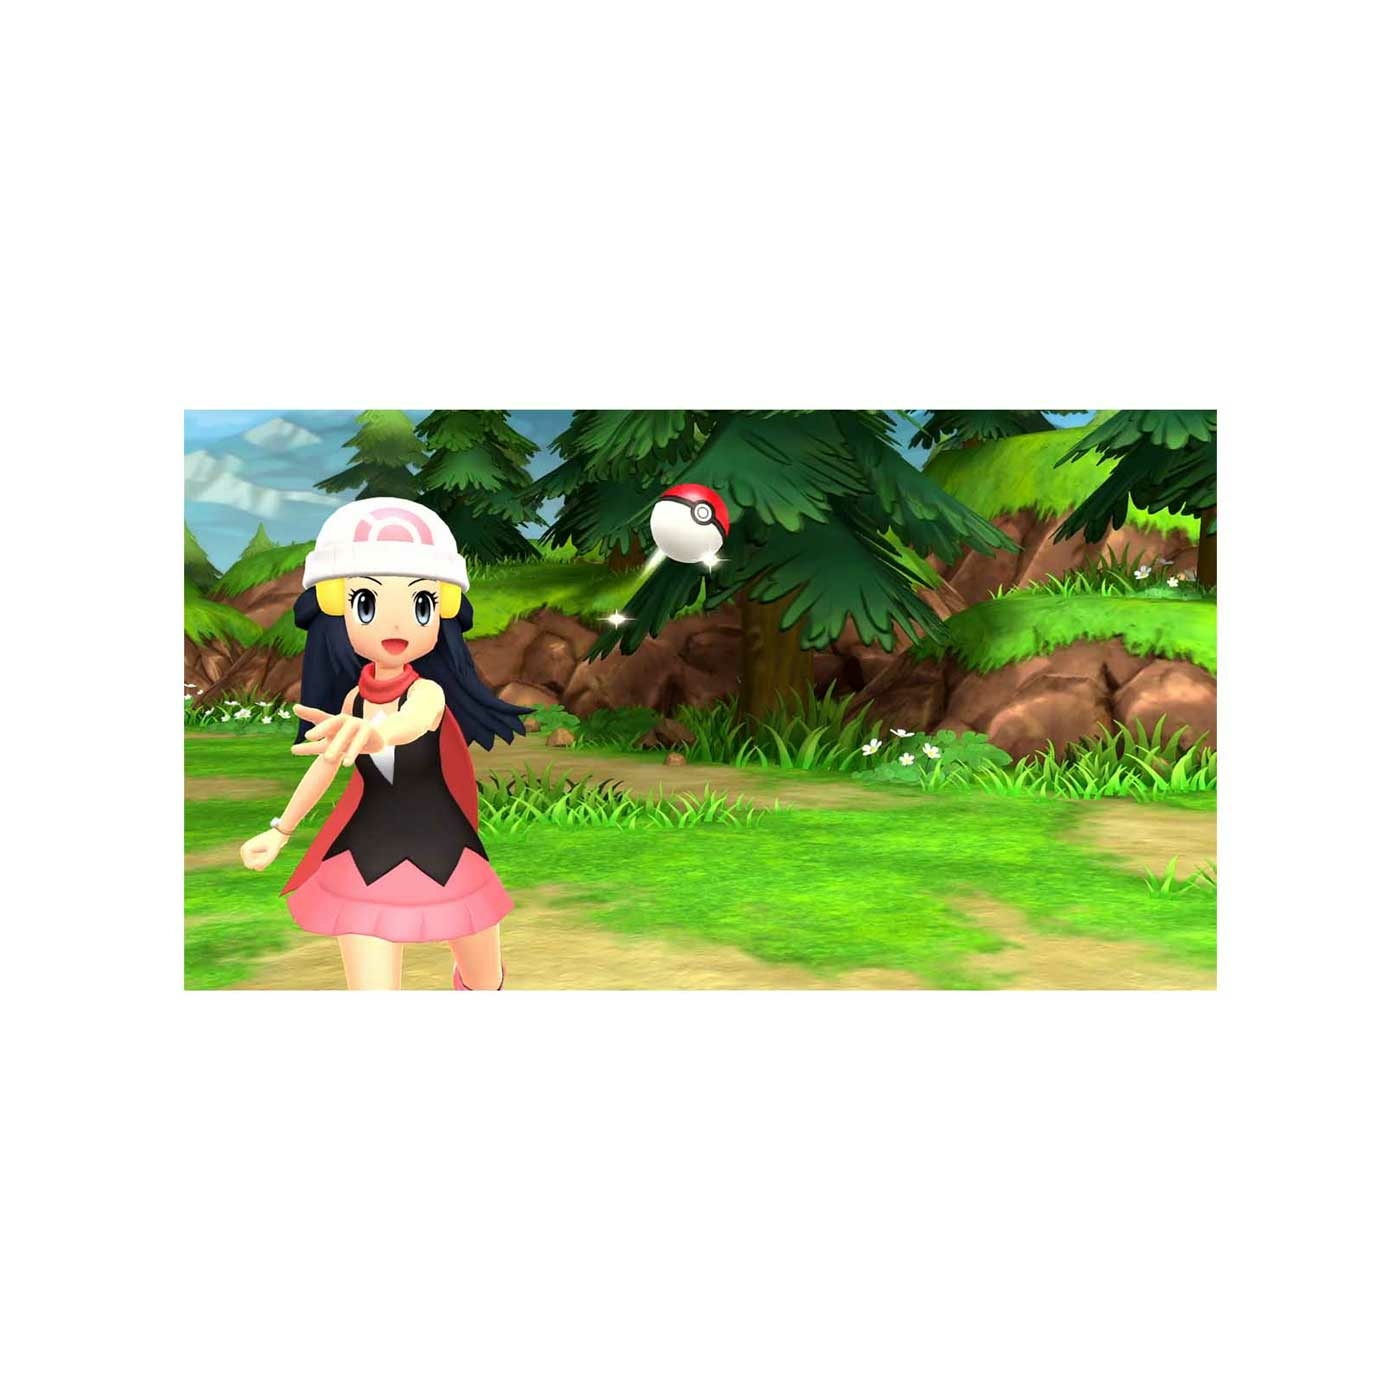 Juego SWITCH Pokémon™ Shining Pearl